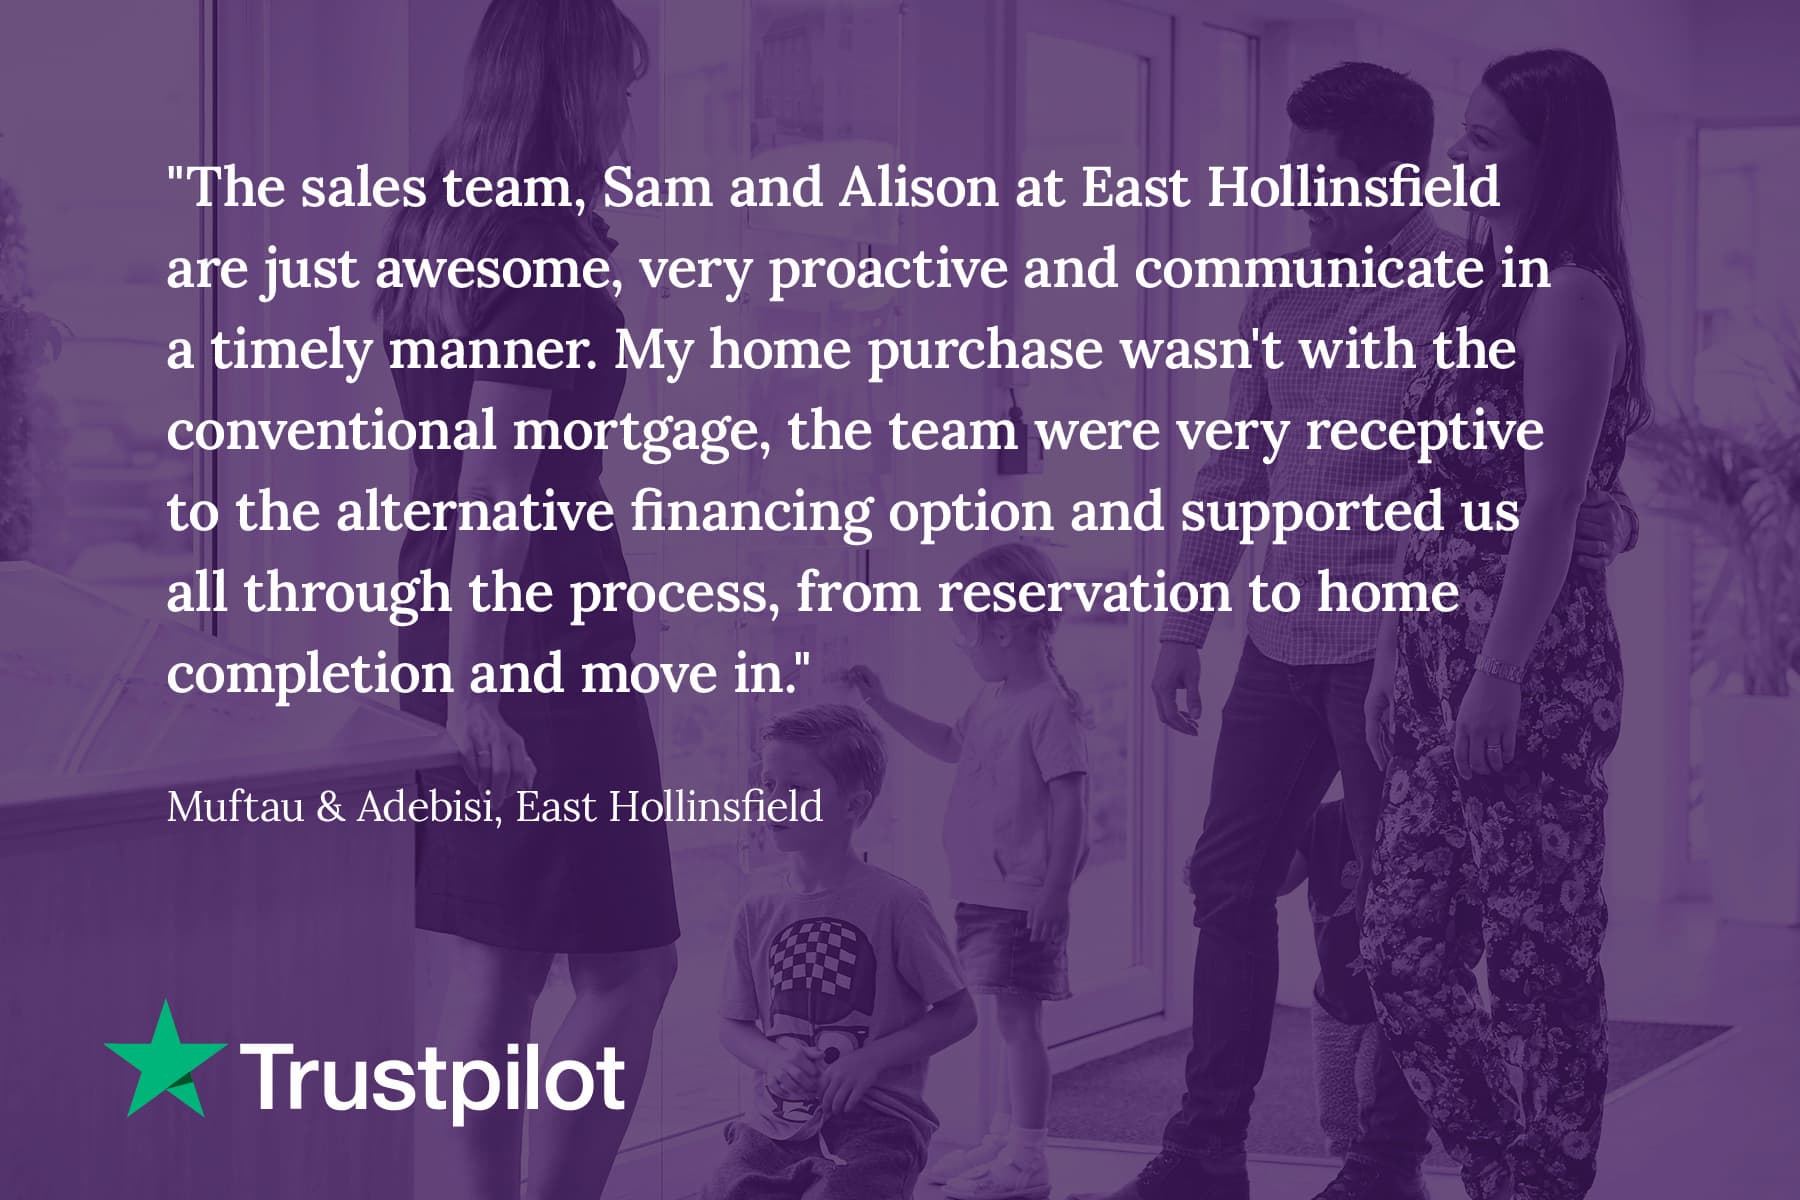 East Hollinsifeld trust pilot review